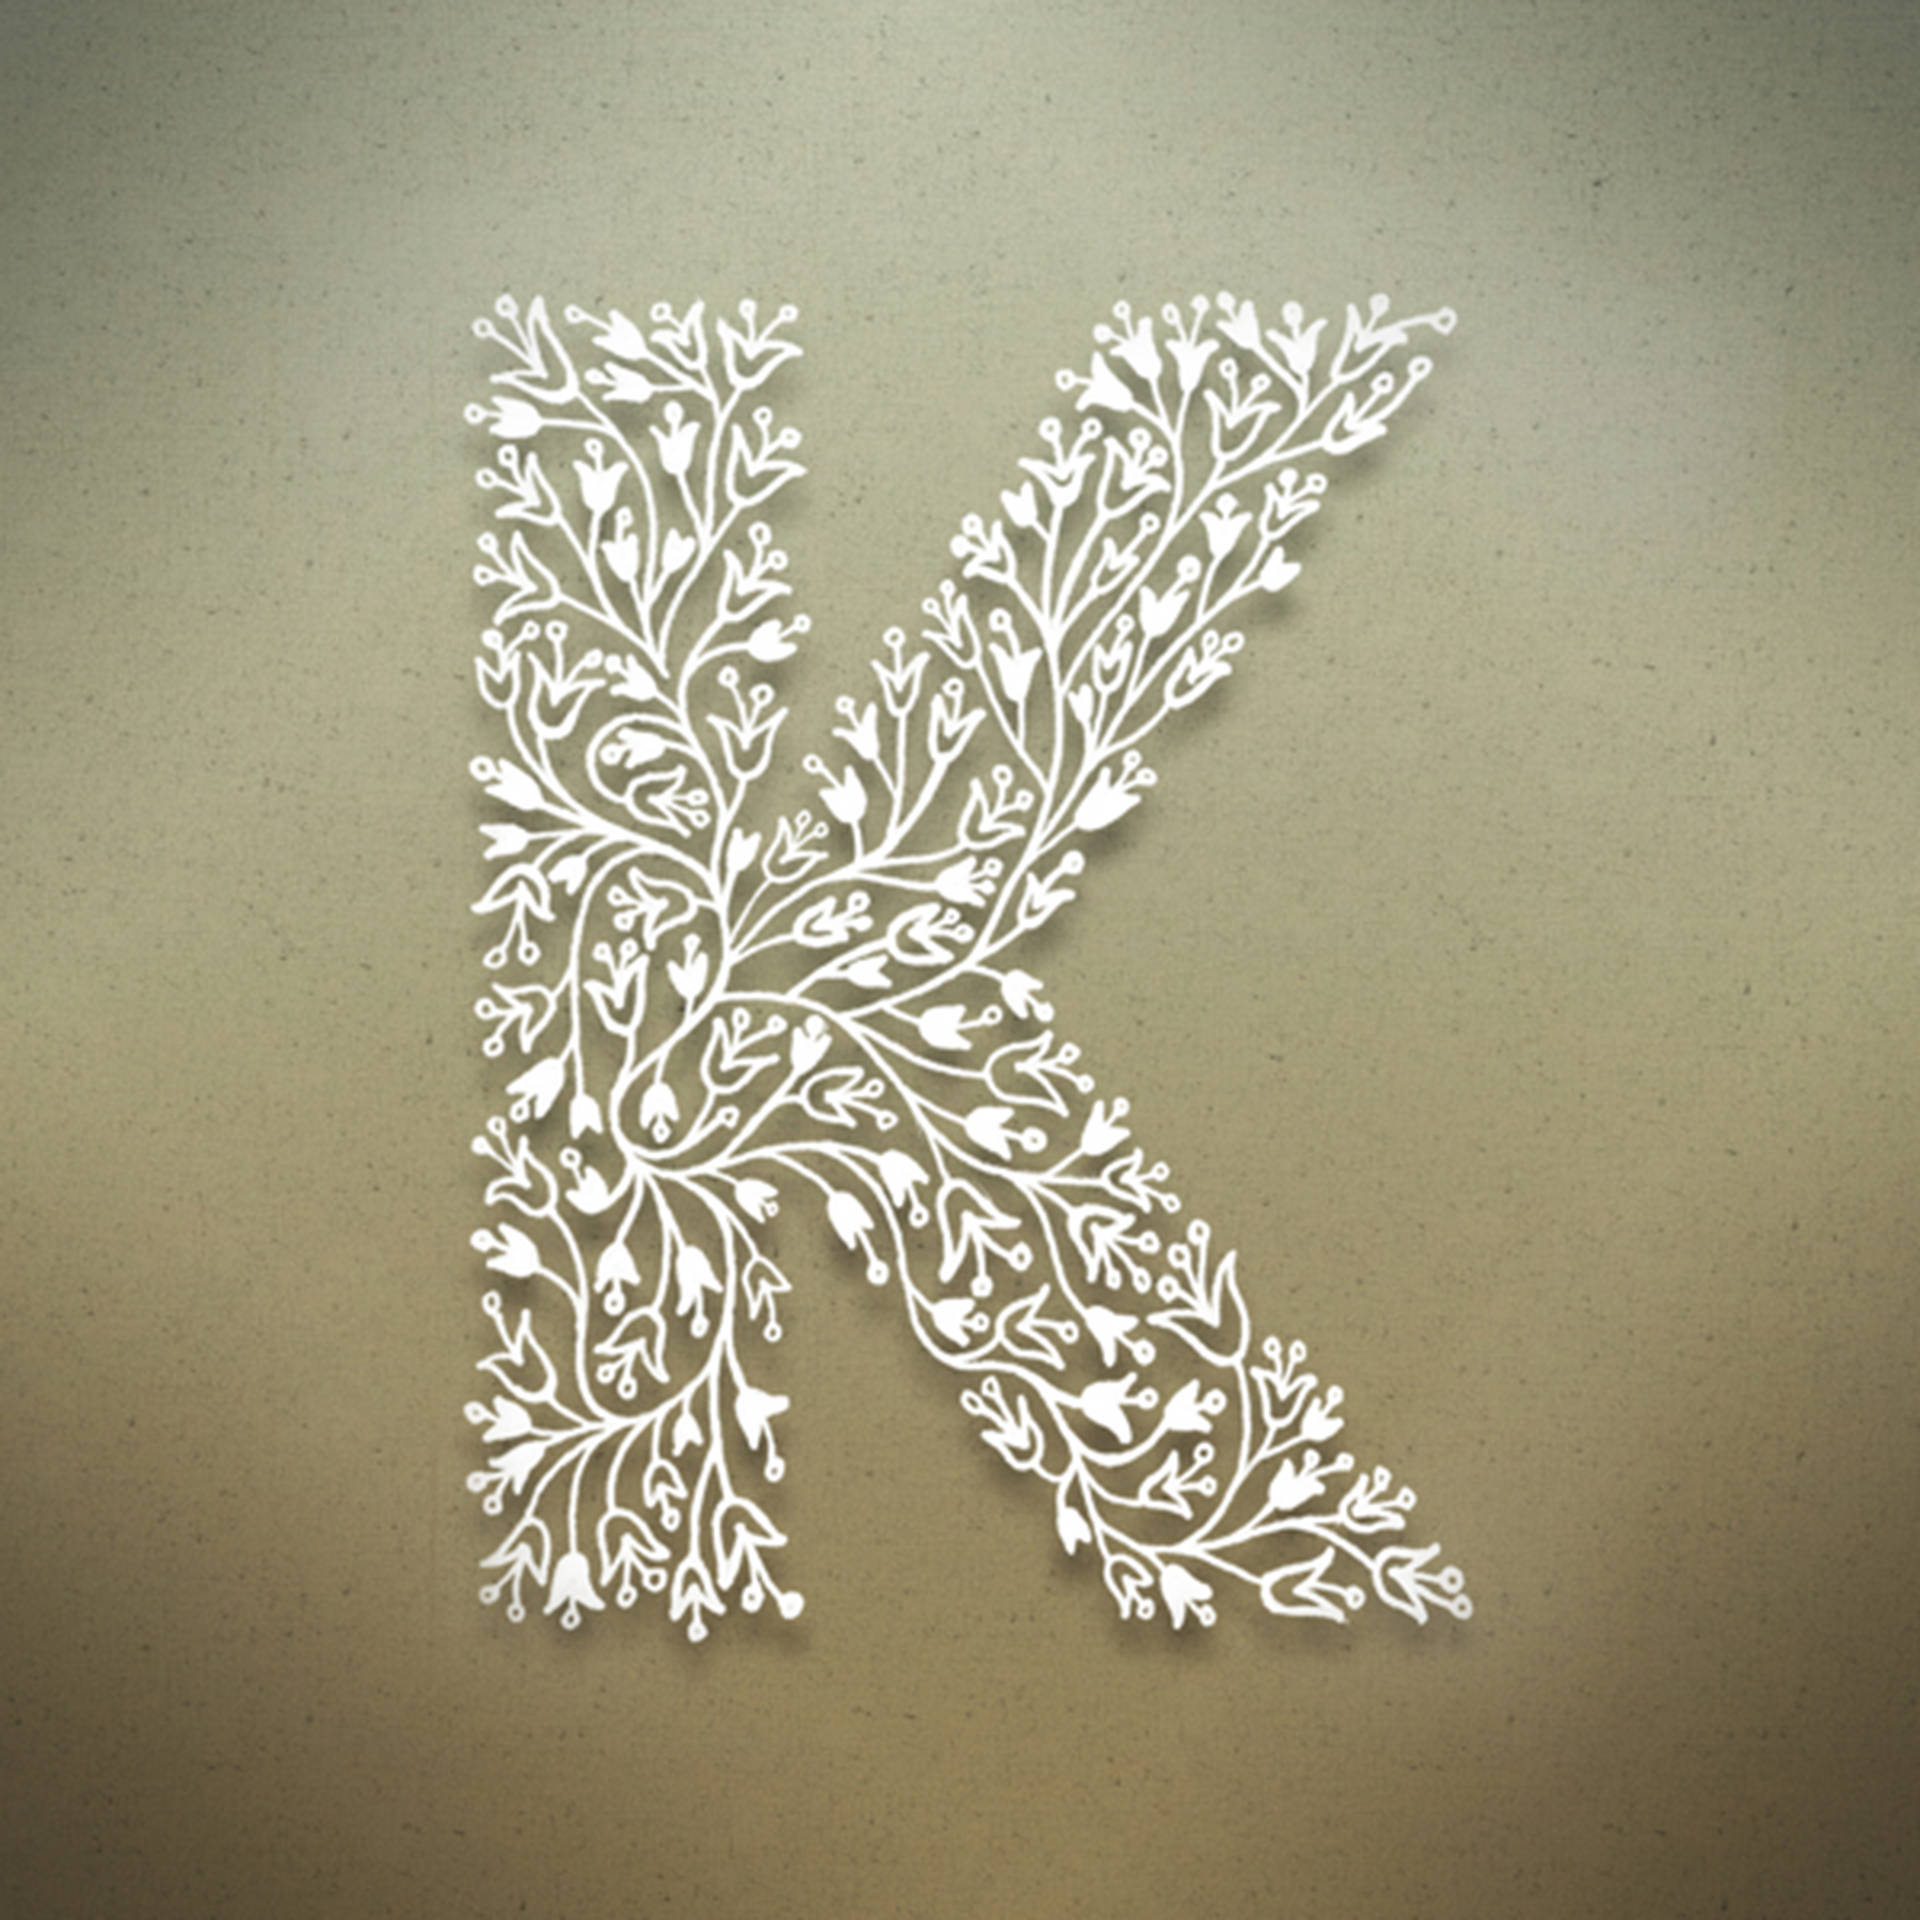 Free Letter K Wallpaper Downloads, [100+] Letter K Wallpapers for FREE |  